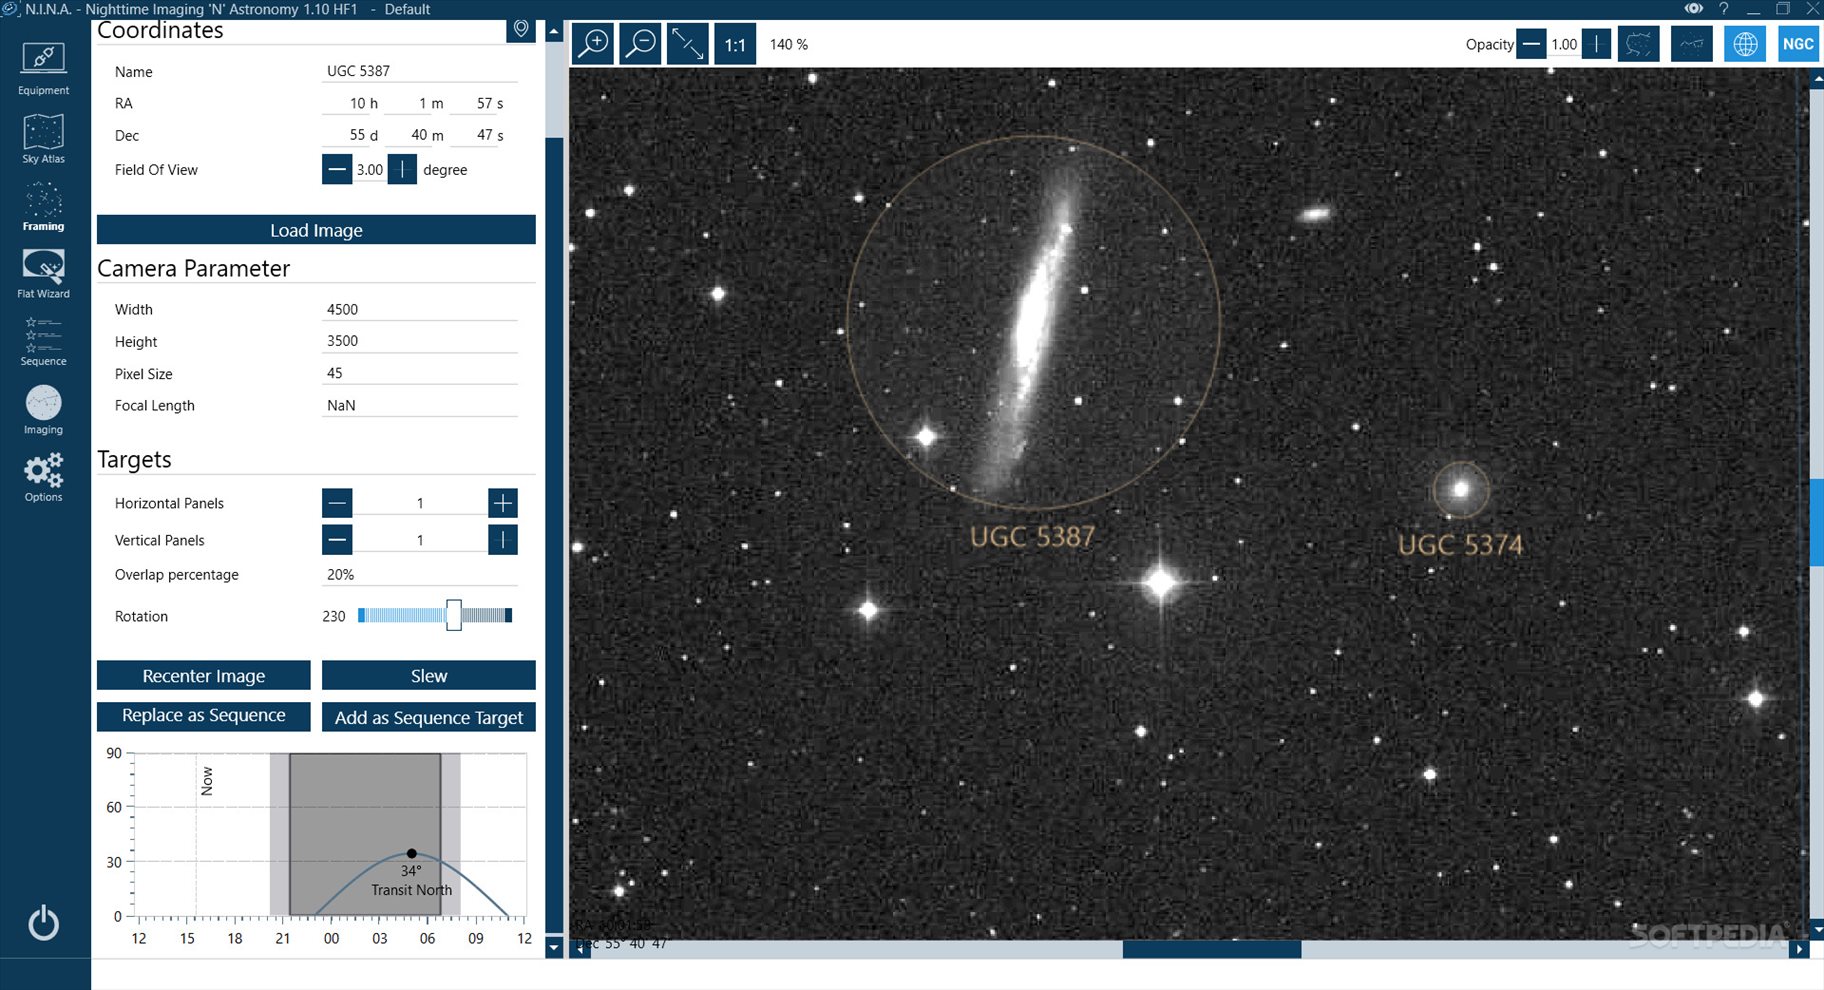 Download Download Nighttime Imaging 'N' Astronomy 1.10.3.9001 / 1.10.3.2003 Beta / 1.11.0.1098 Nightly Free